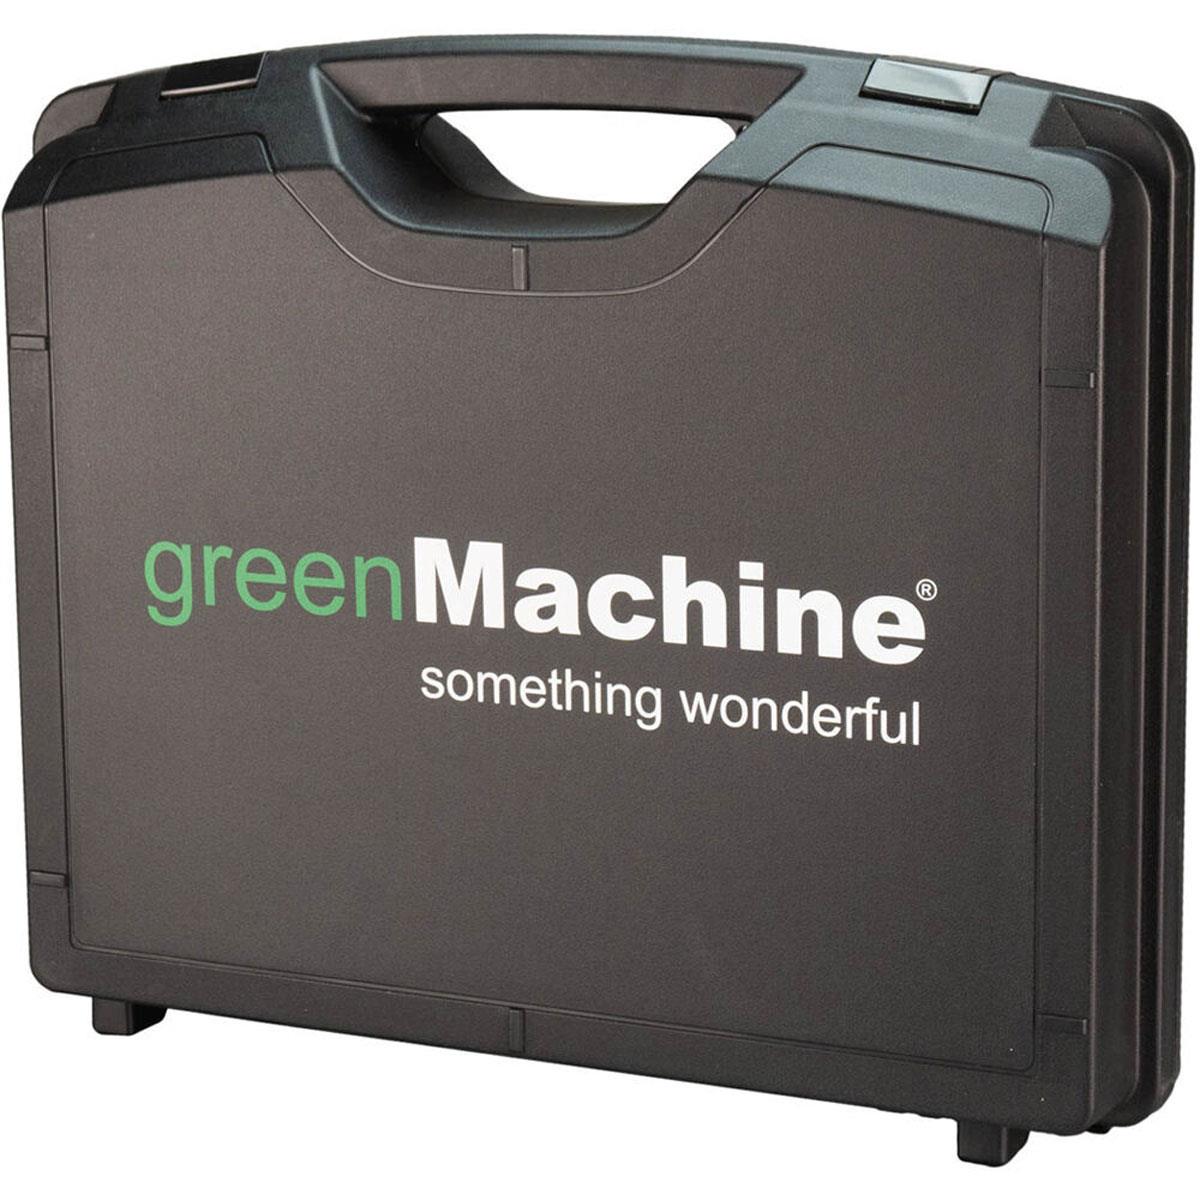 Image of Lynx Technik AG ABS Plastic Transport Case for Green Machine